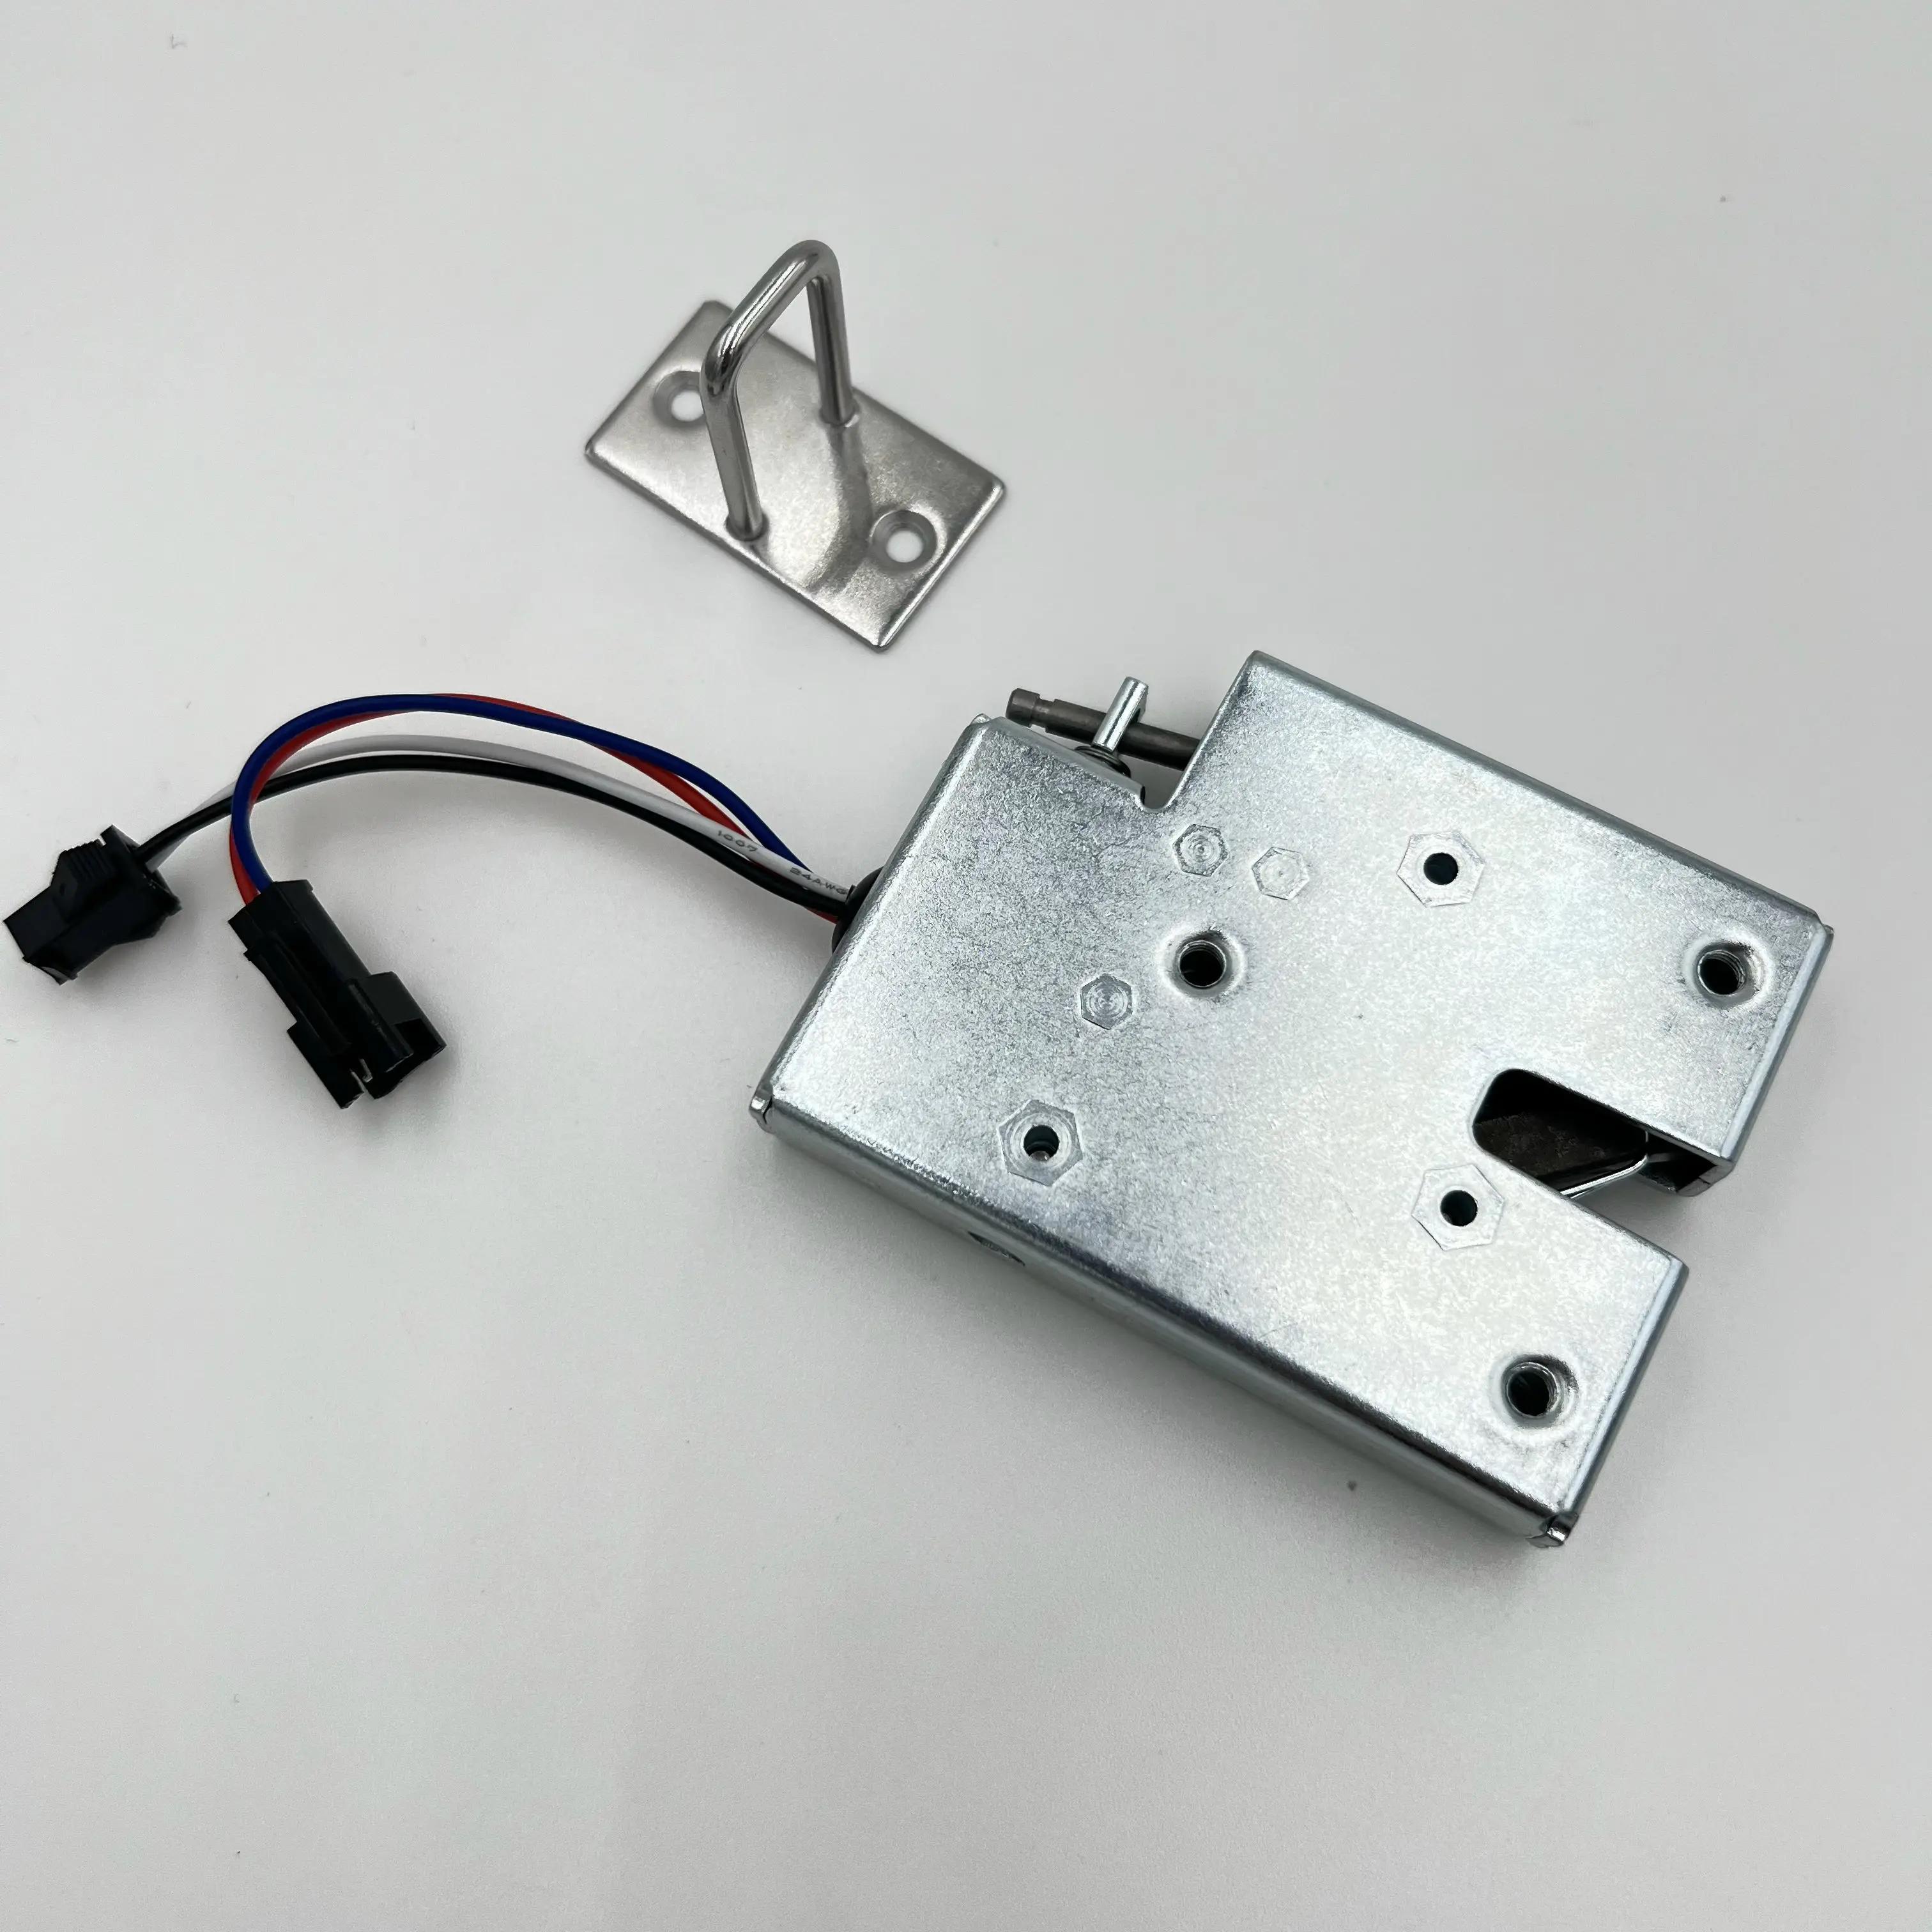 

Hot Sale DC12V 2.5A Mini Electrical Lock Locker Smart Cabinet Lock Picks Latch Fail Secure for Express Cupboard Case DB-210